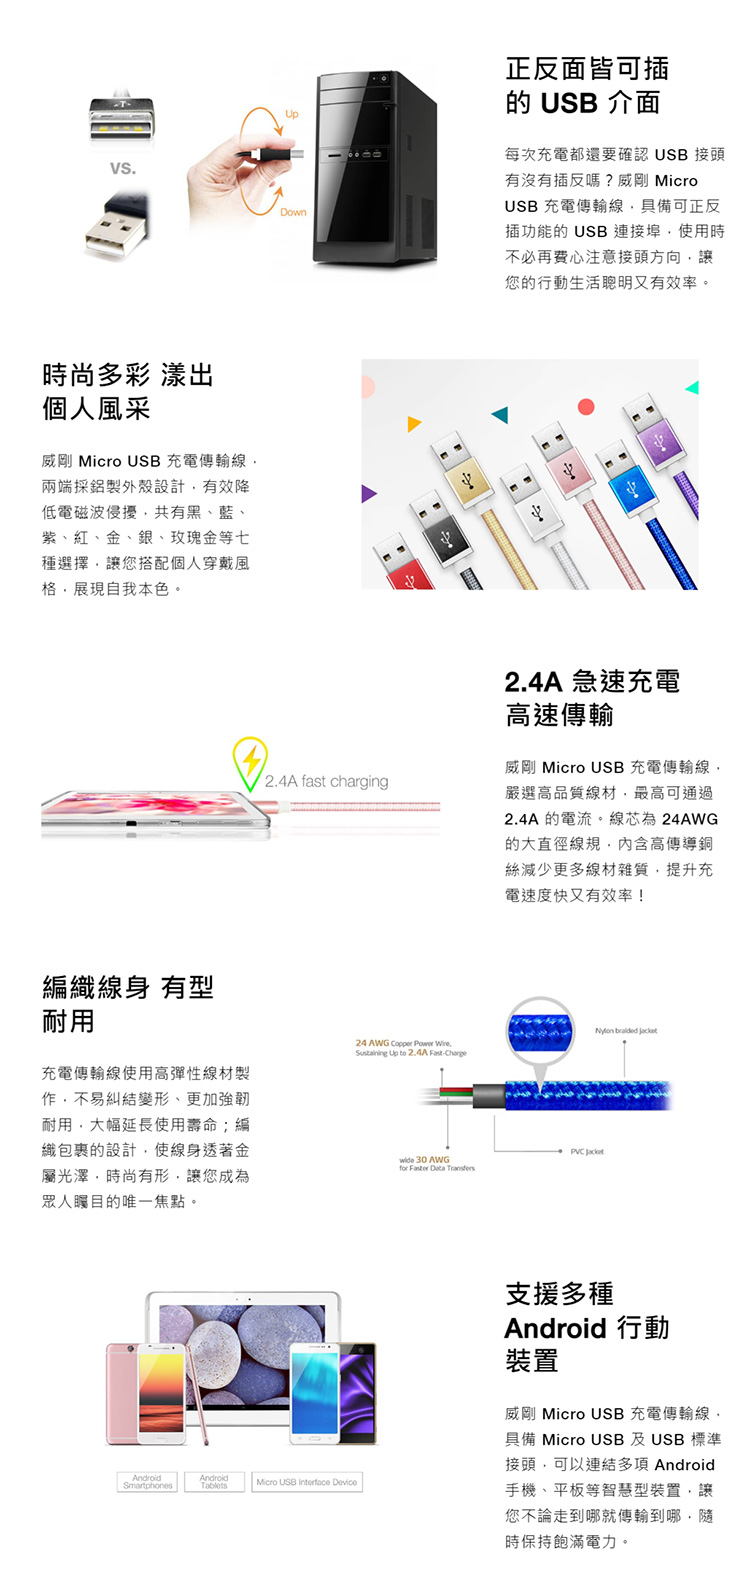 威剛-Micro-USB-Cable-1米-傳輸線-銀色-內.jpg